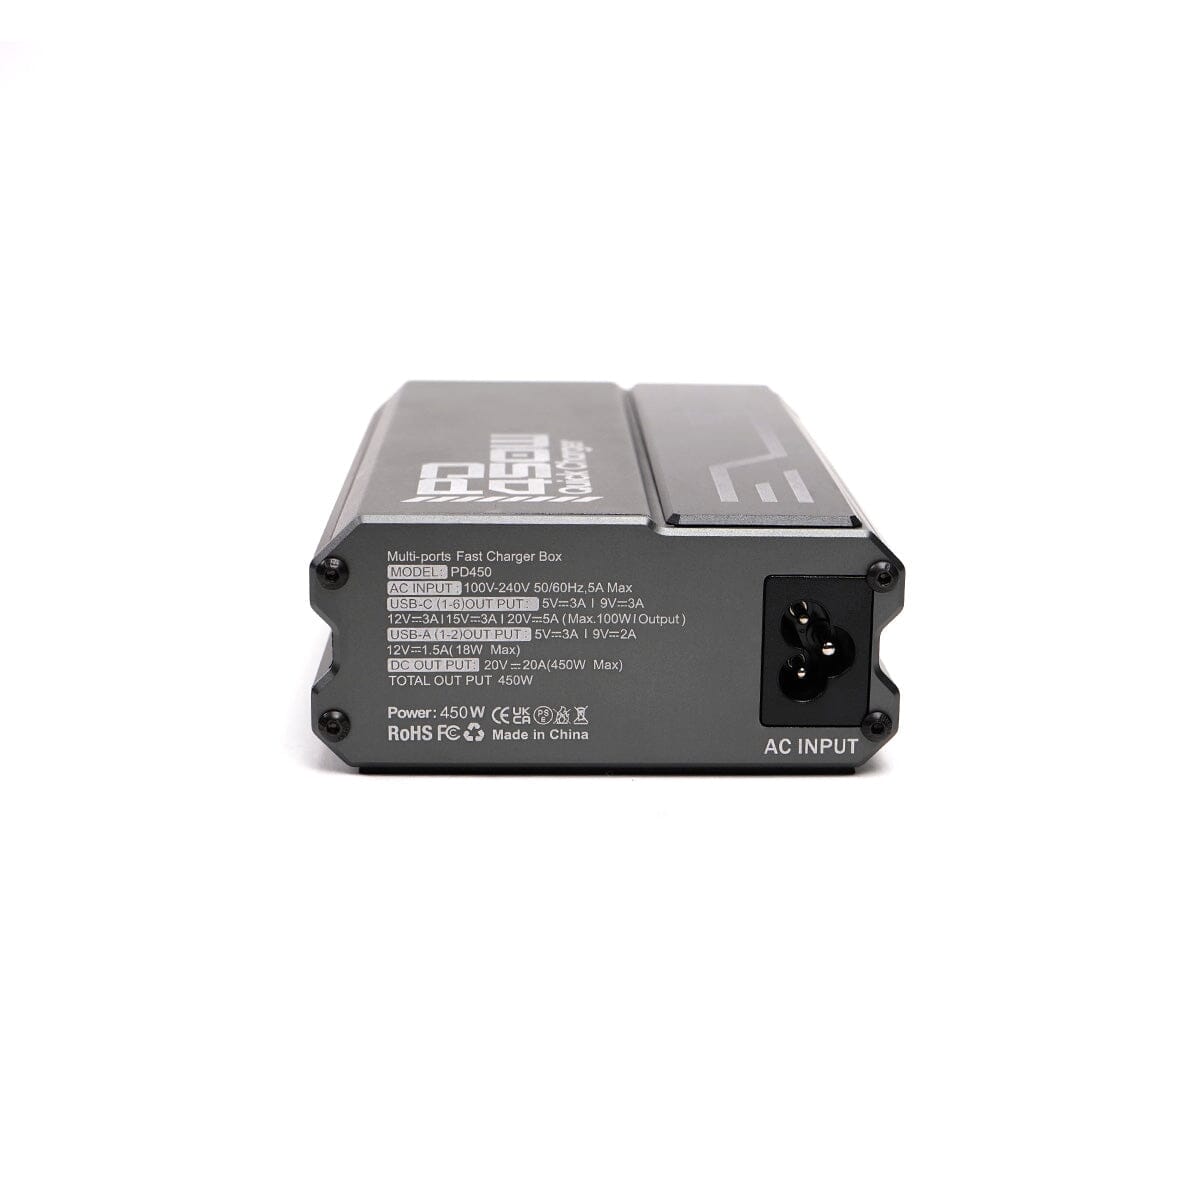 Indipro PD450Wh Intelligent Fast Charging Box Power Bundle Indipro Tools 